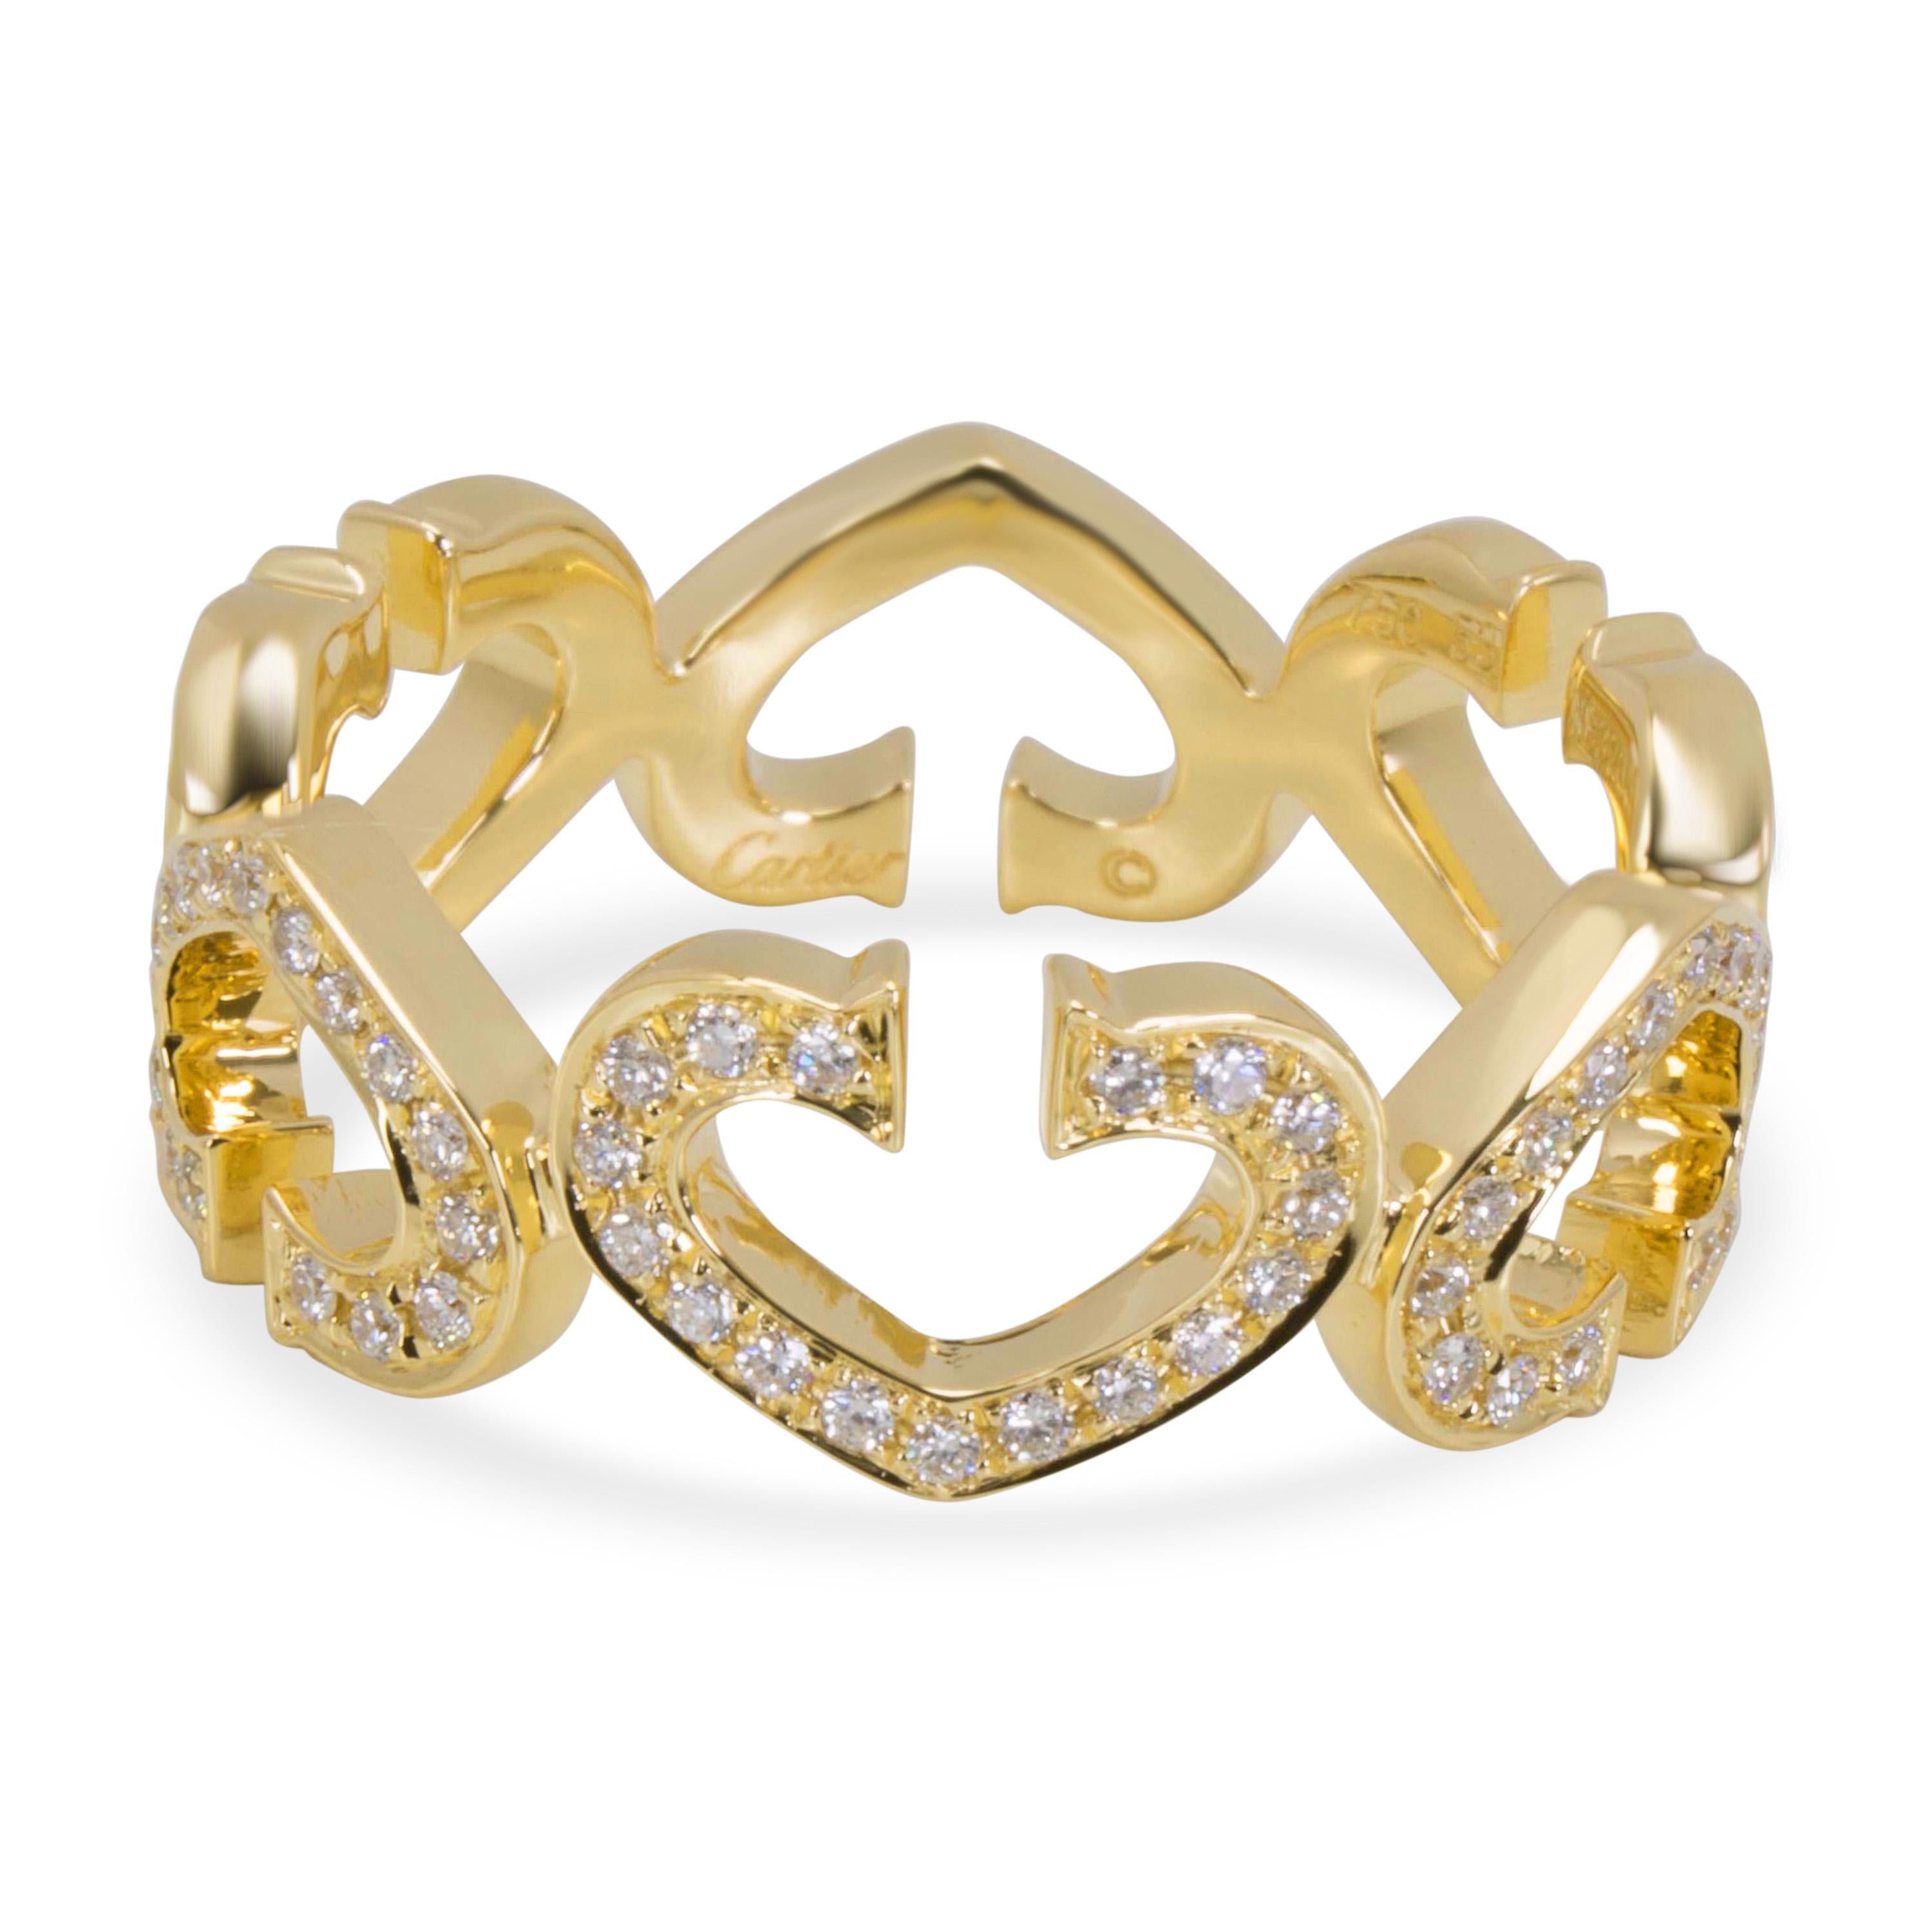 Women's Cartier C Hearts of Cartier Diamond Ring in 18 Karat Yellow Gold '0.50 Carat'